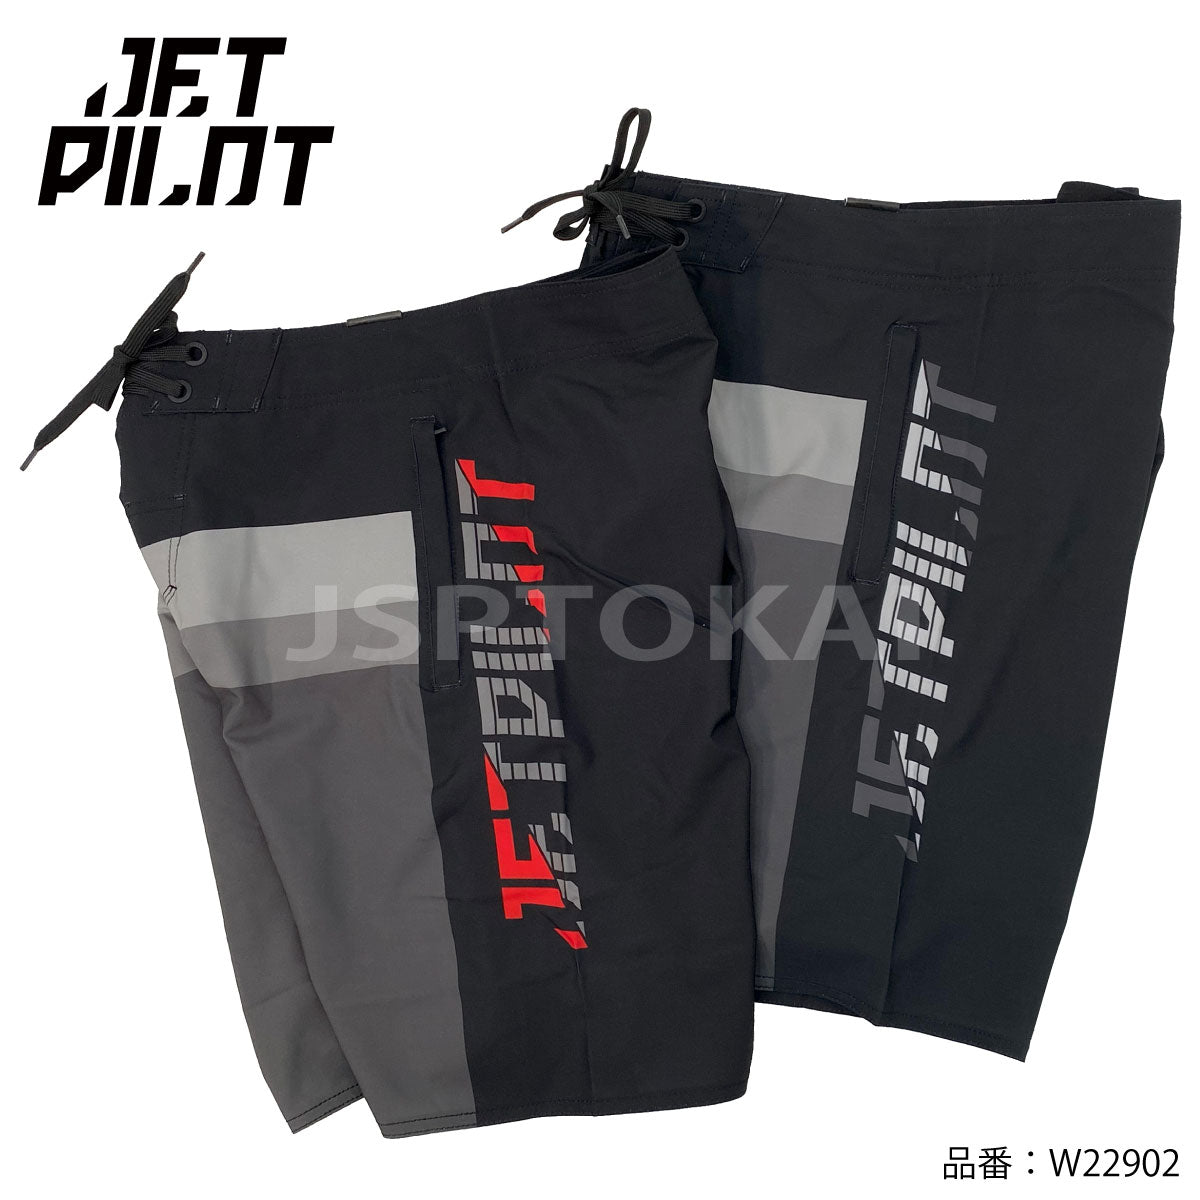 【34%OFF】JETPILOT ジェットパイロットSPCICER BS MEN'S BOARDSHORT メンズ W22902